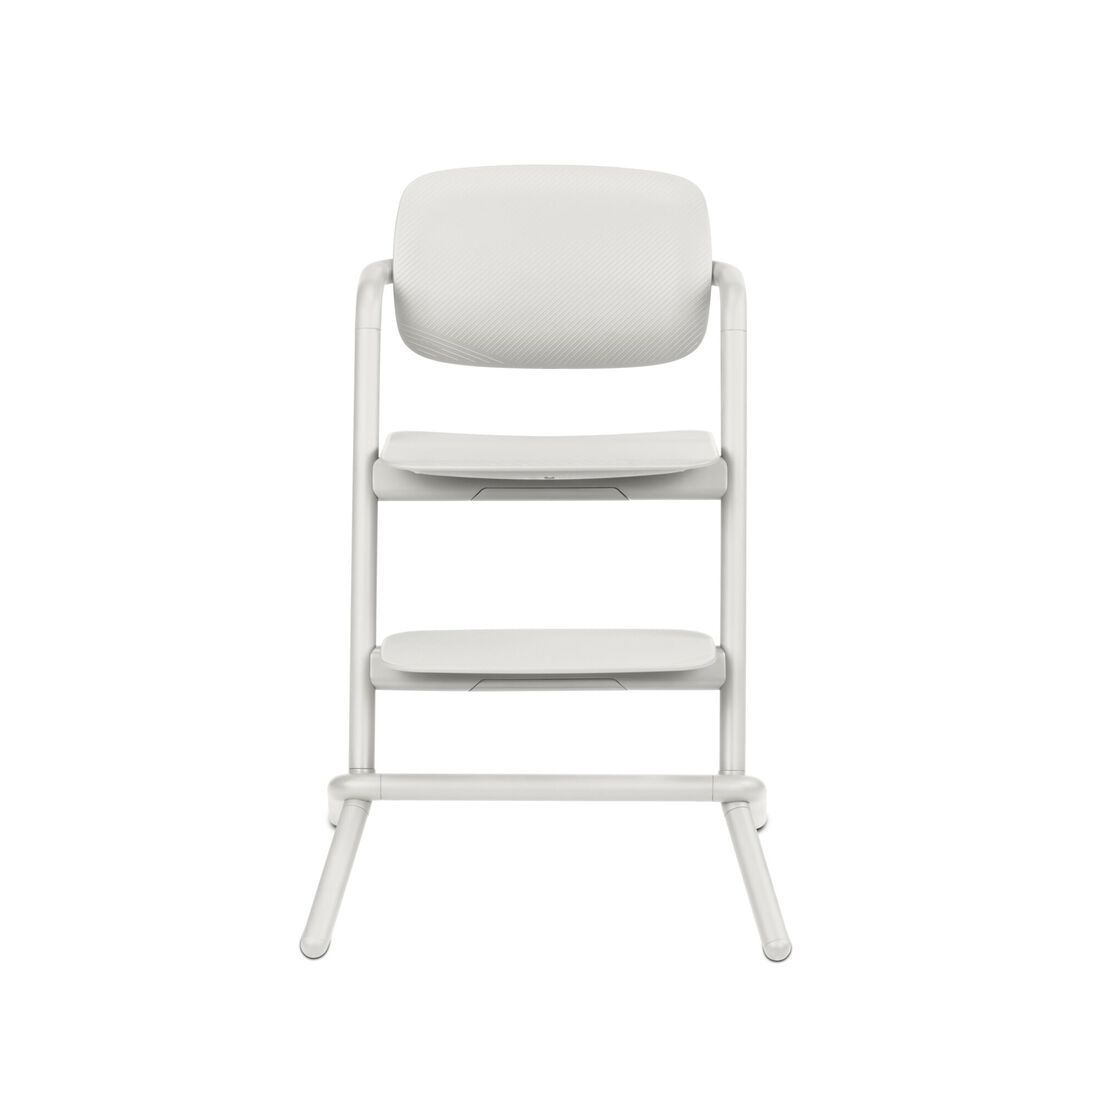 CYBEX Lemo Chair - Porcelaine White (Plastic) in Porcelaine White (Plastic) large image number 2